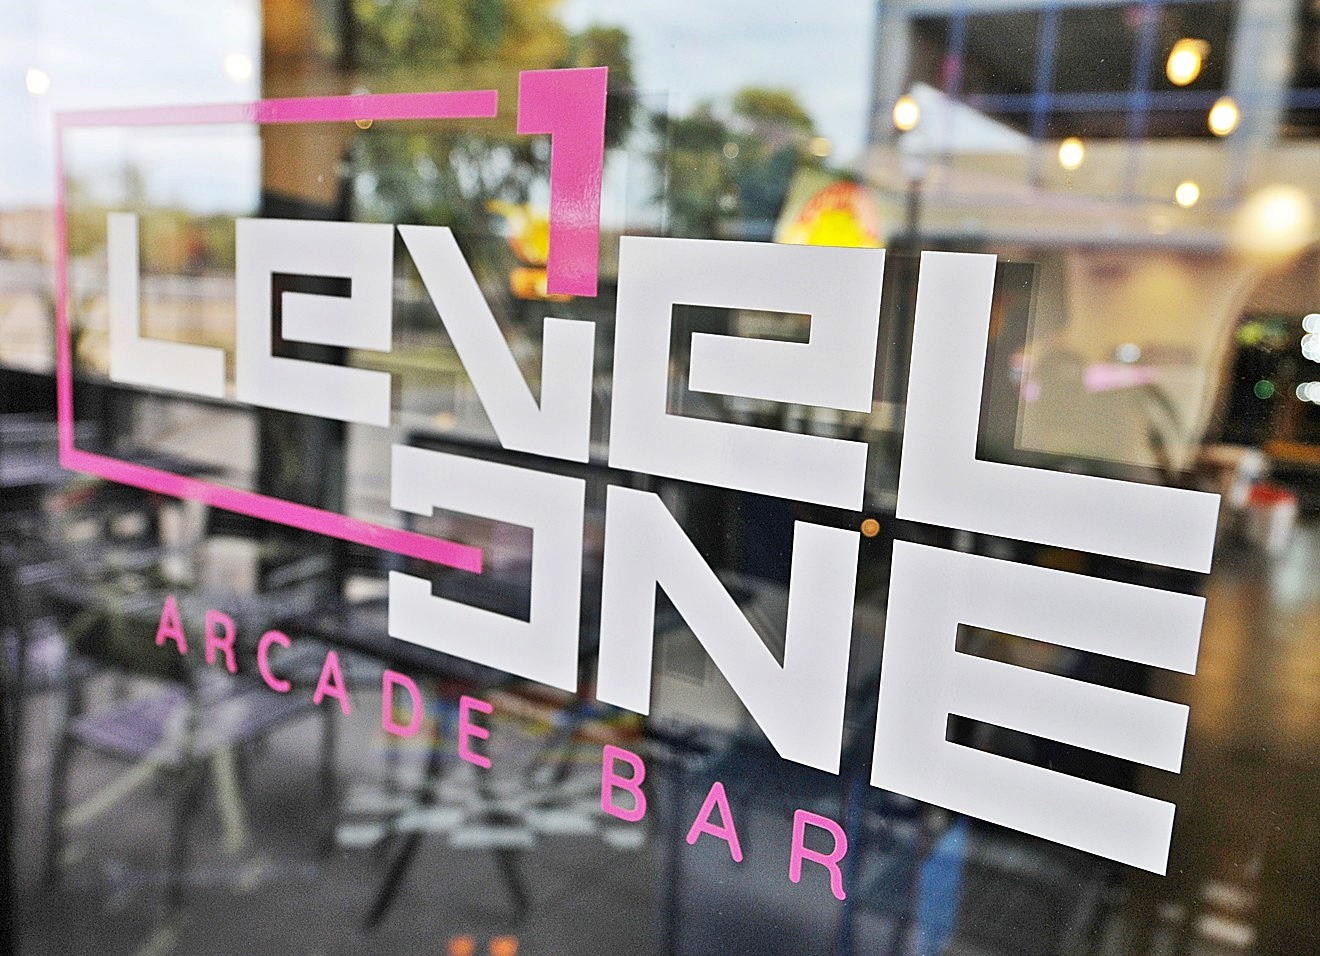 Level 1 Arcade Bar's original location in Gilbert.